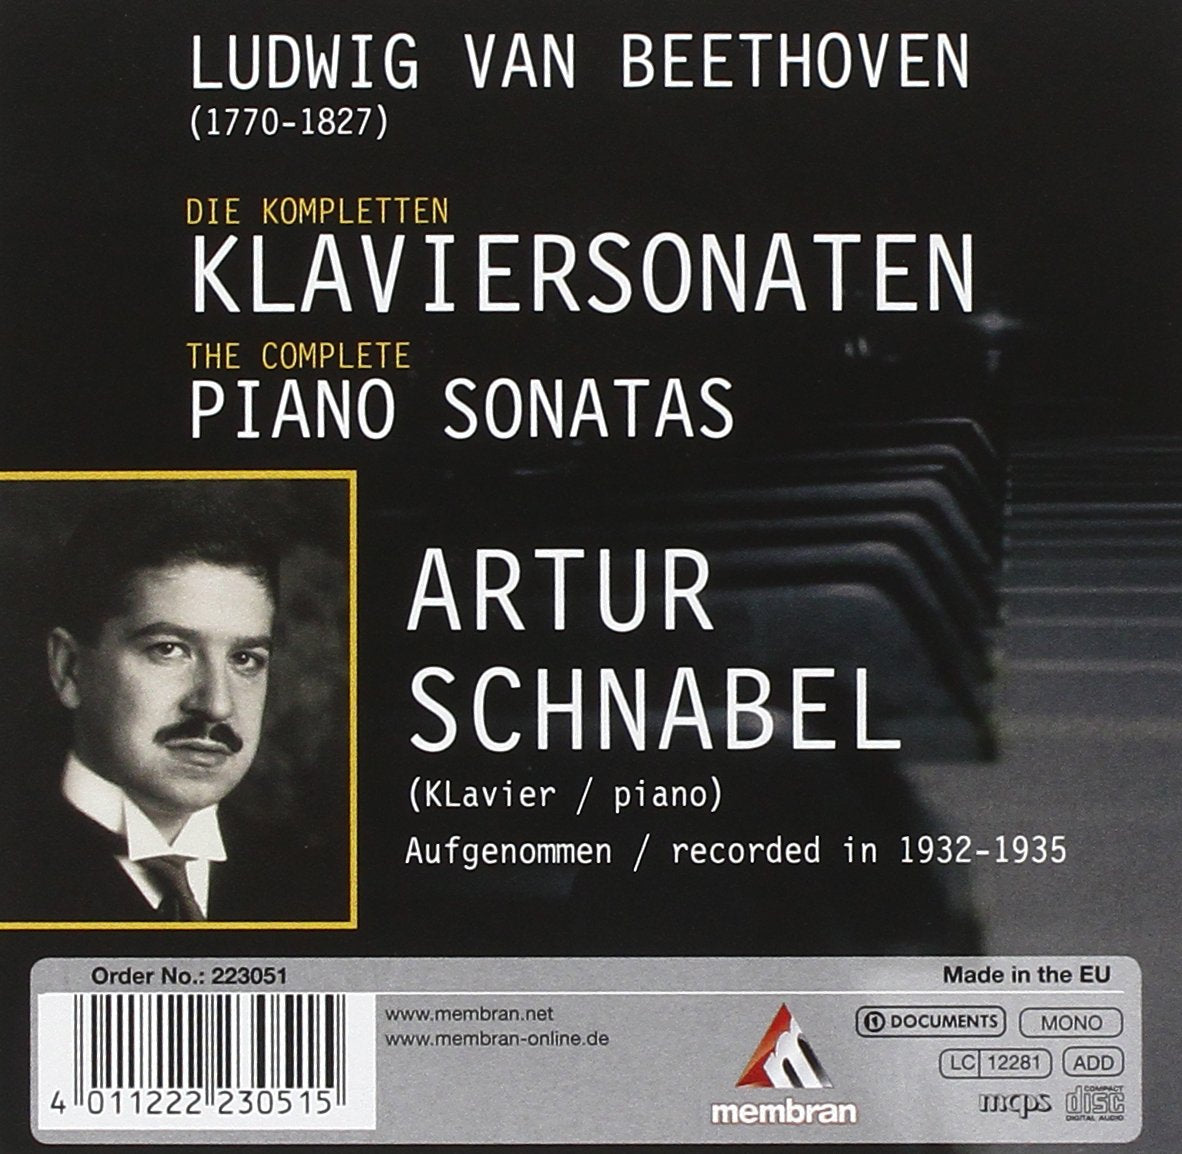 BEETHOVEN: PIANO SONATAS - SCHNABEL (10 CDS)